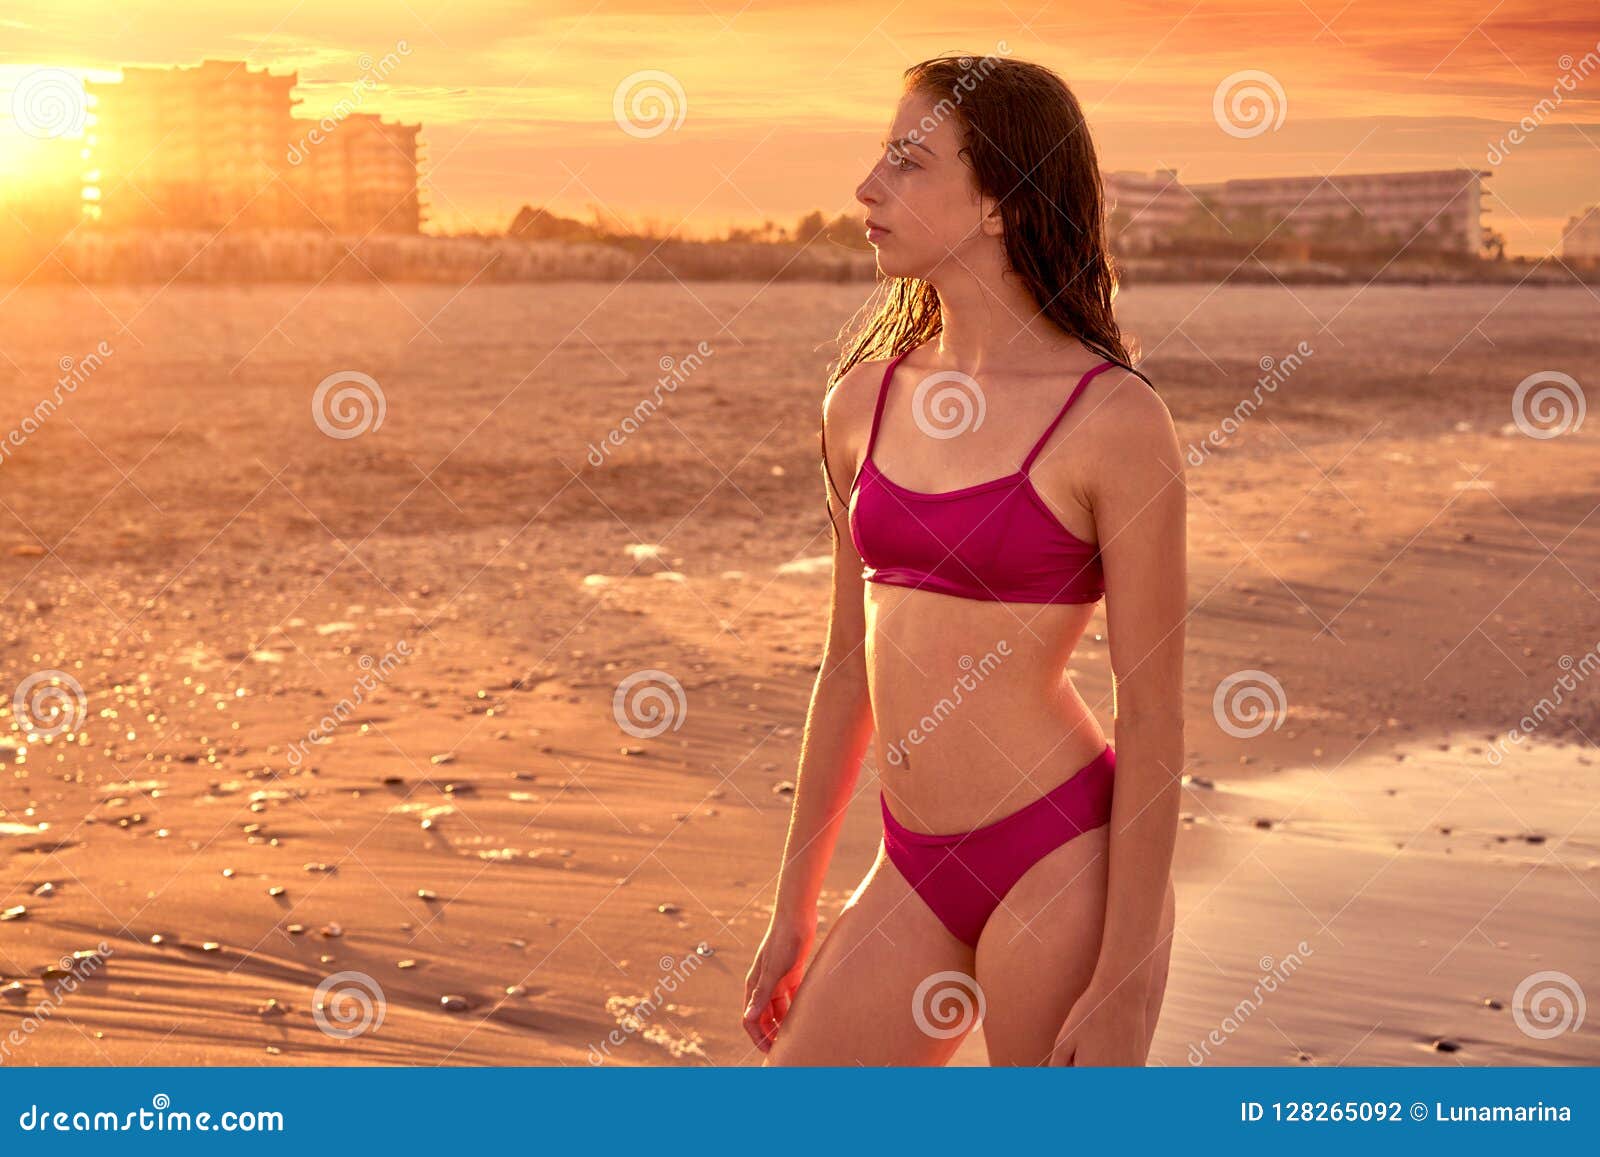 151,716 Bikini Girl Beach Stock Photos - Free & Royalty-Free Stock